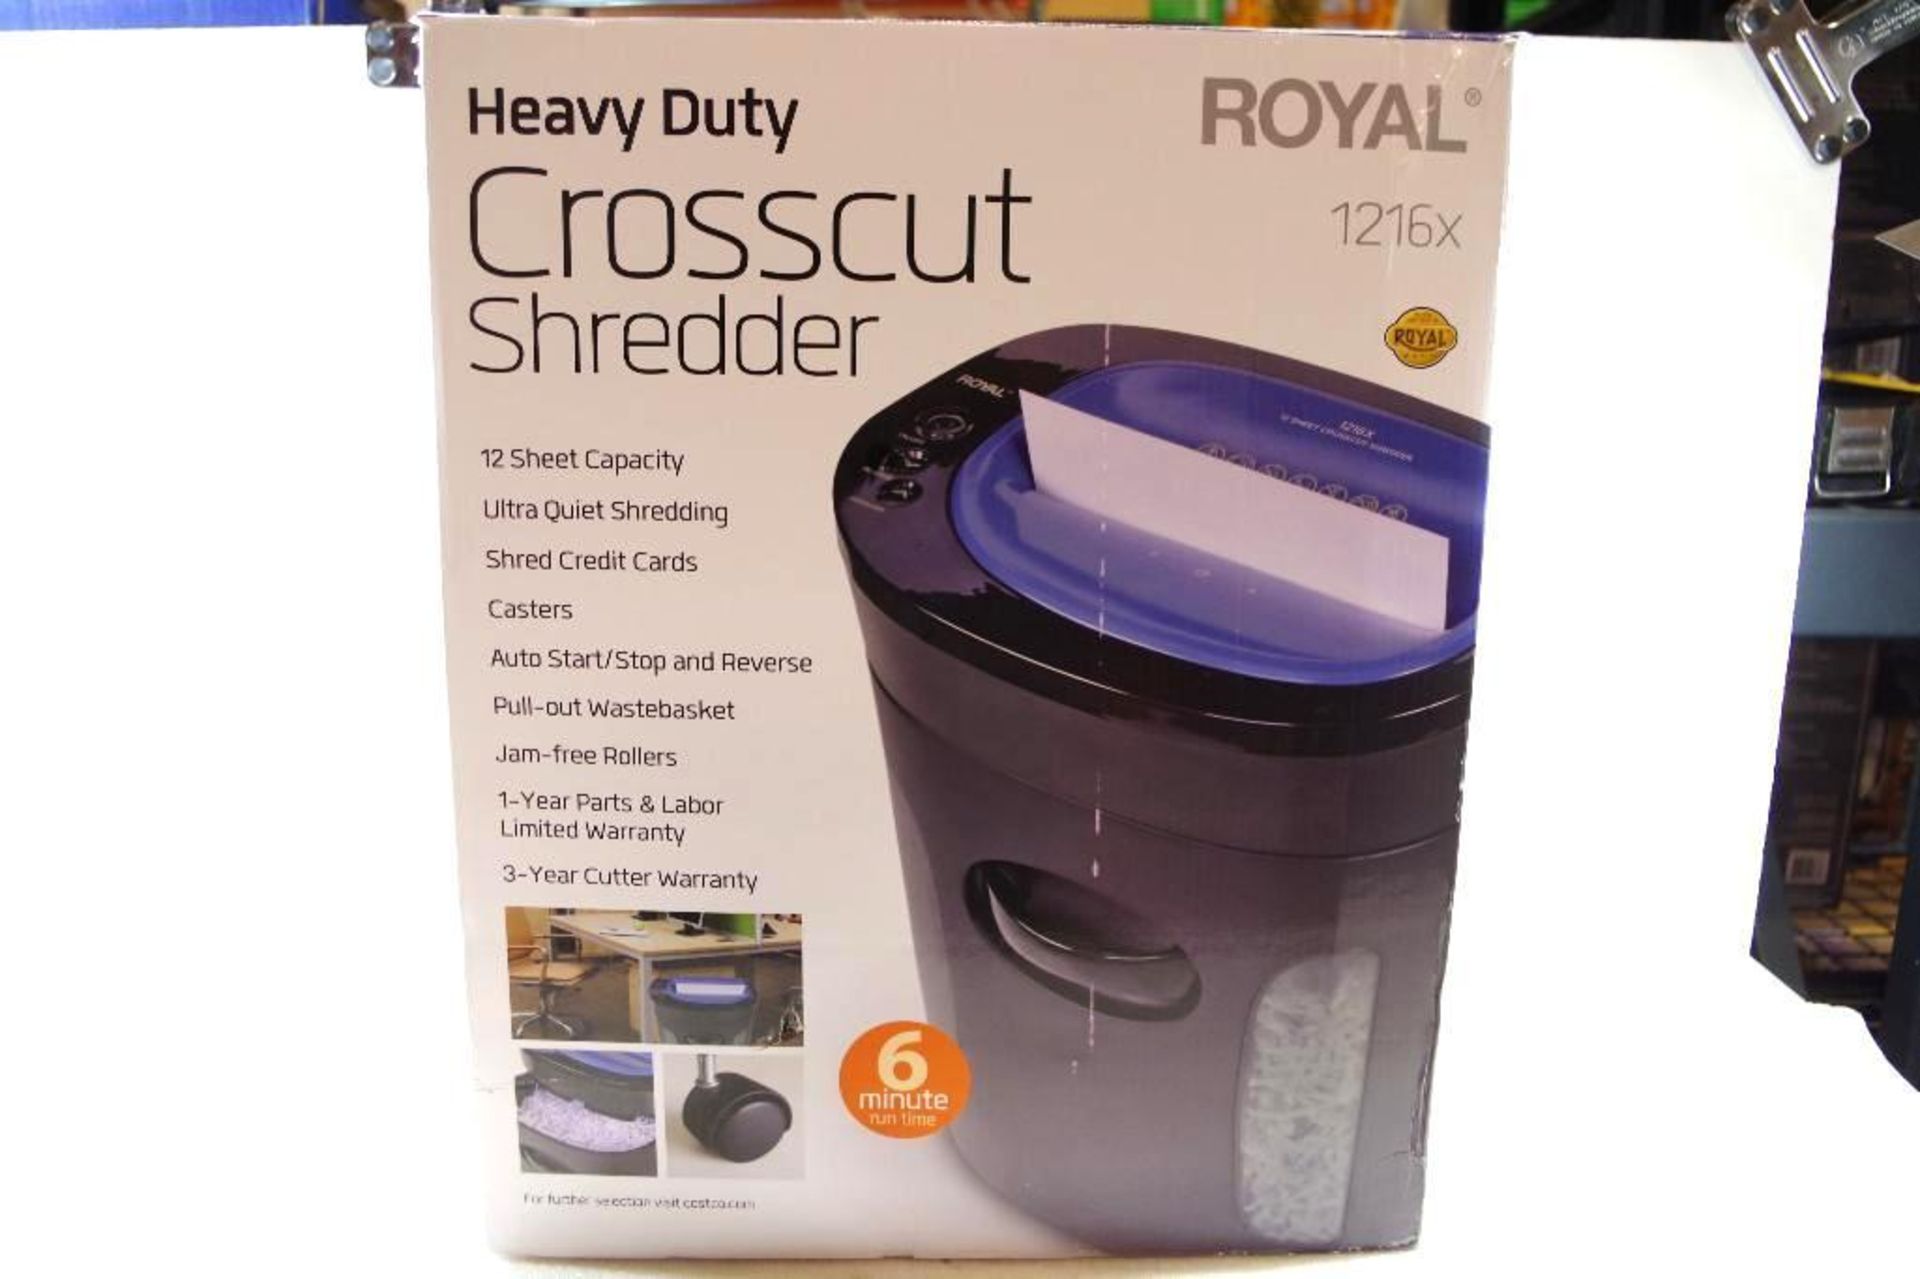 ROYAL Heavy Duty Crosscut Shredder (Store Return, Condition Unknown)